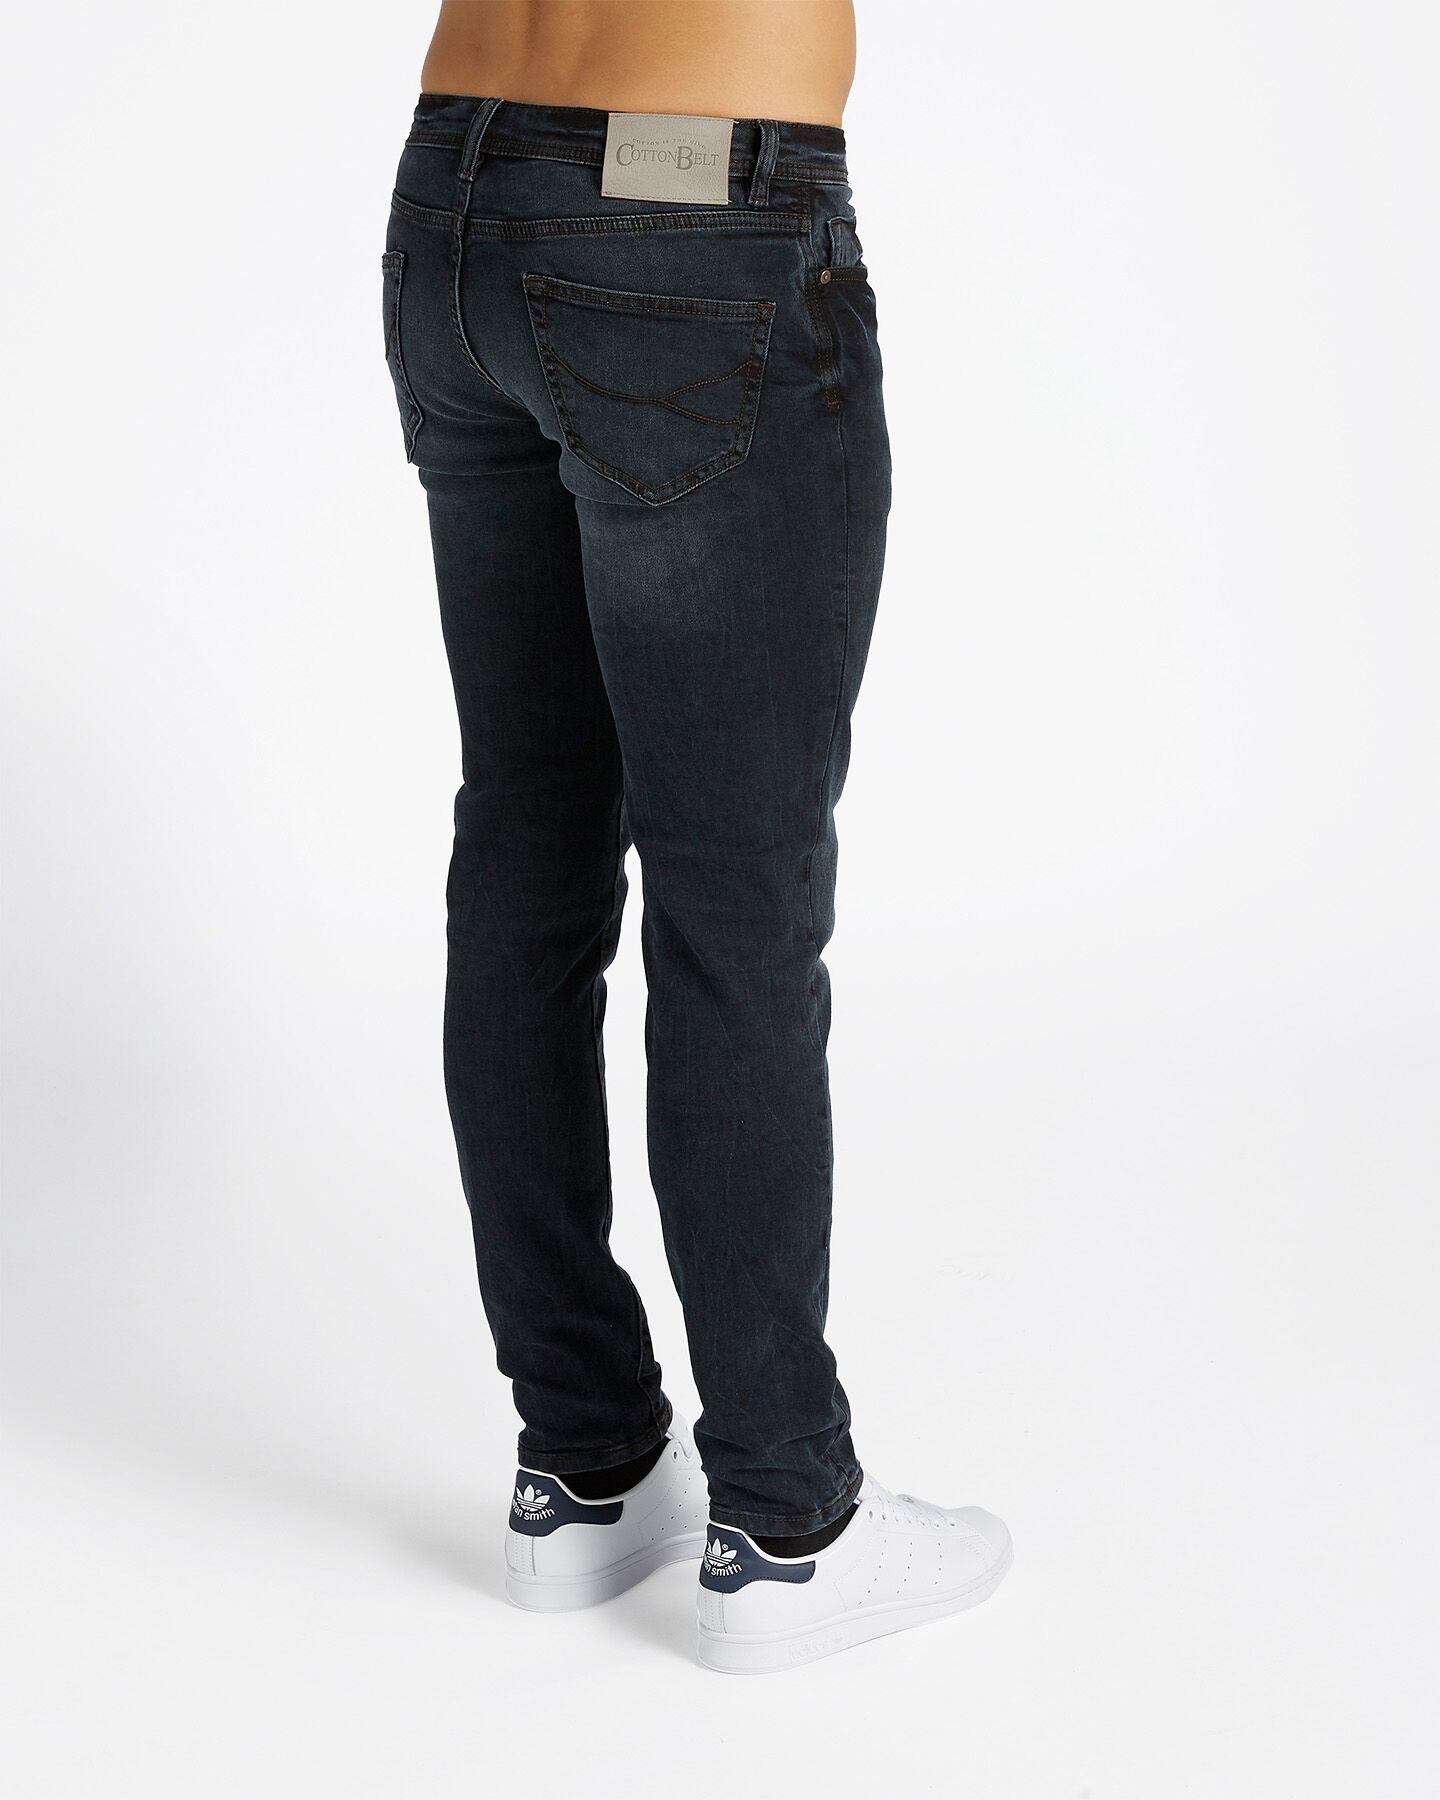  Jeans COTTON BELT TYLER SLIM M S4070910|MD|30 scatto 1